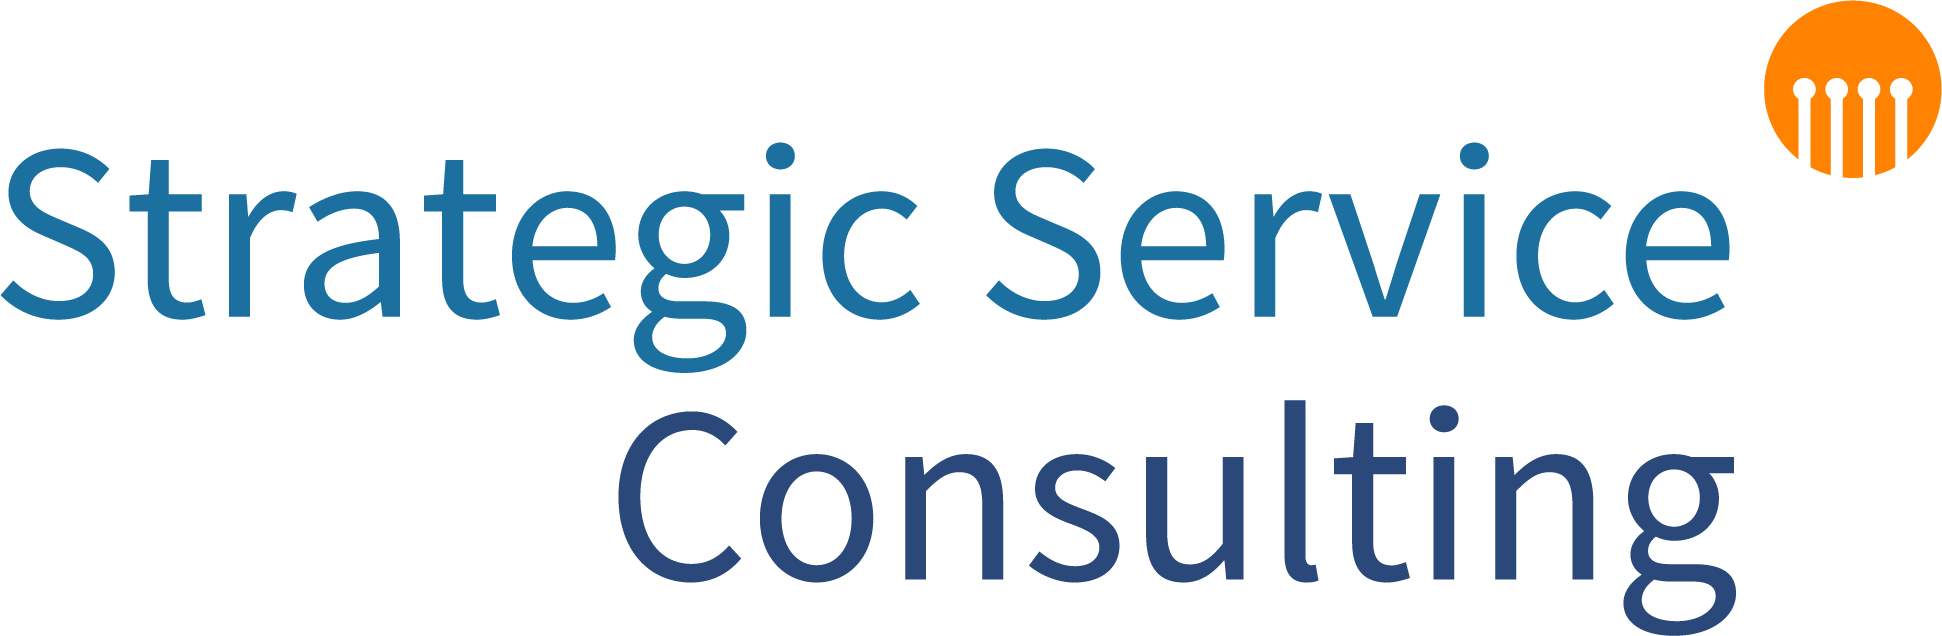 Strategic Consulting Service Logo